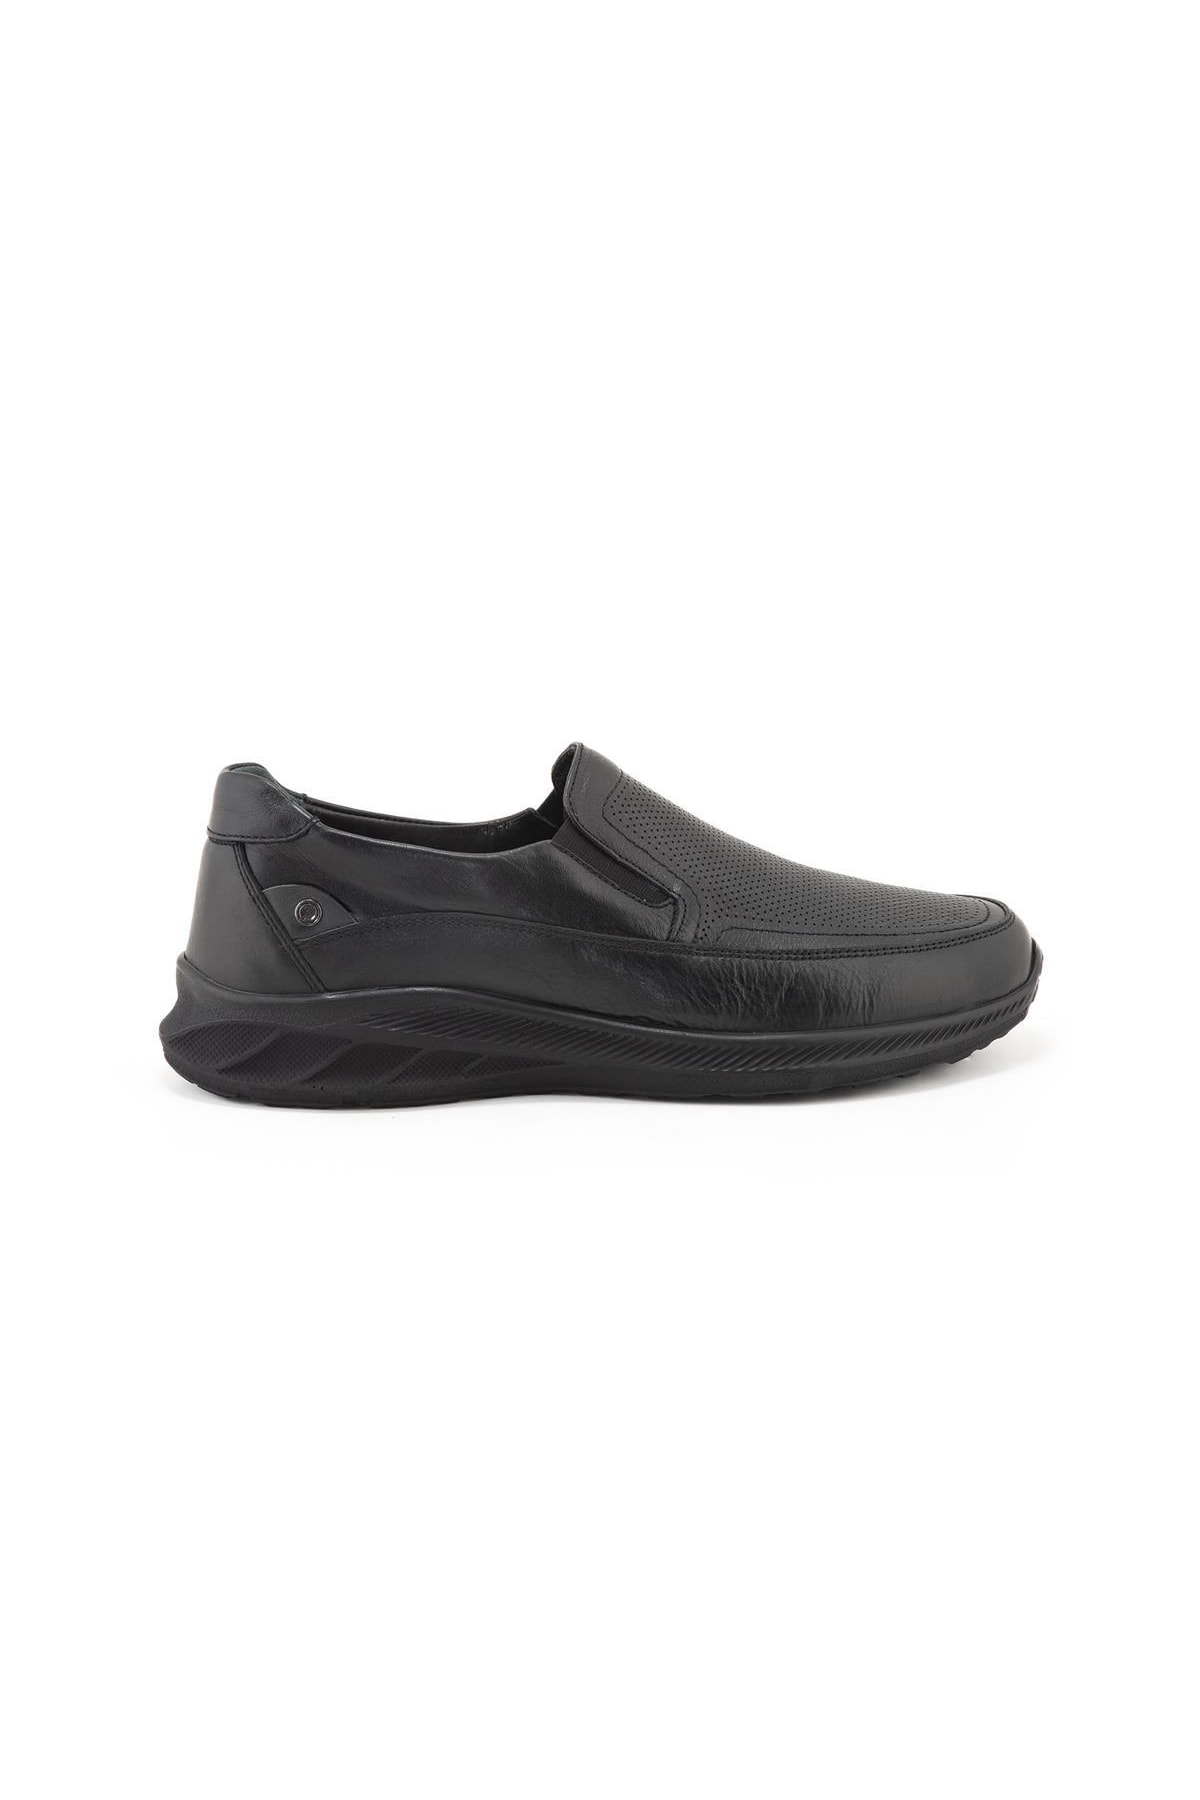 Forelli Costa G Comfort Men's Shoes Black